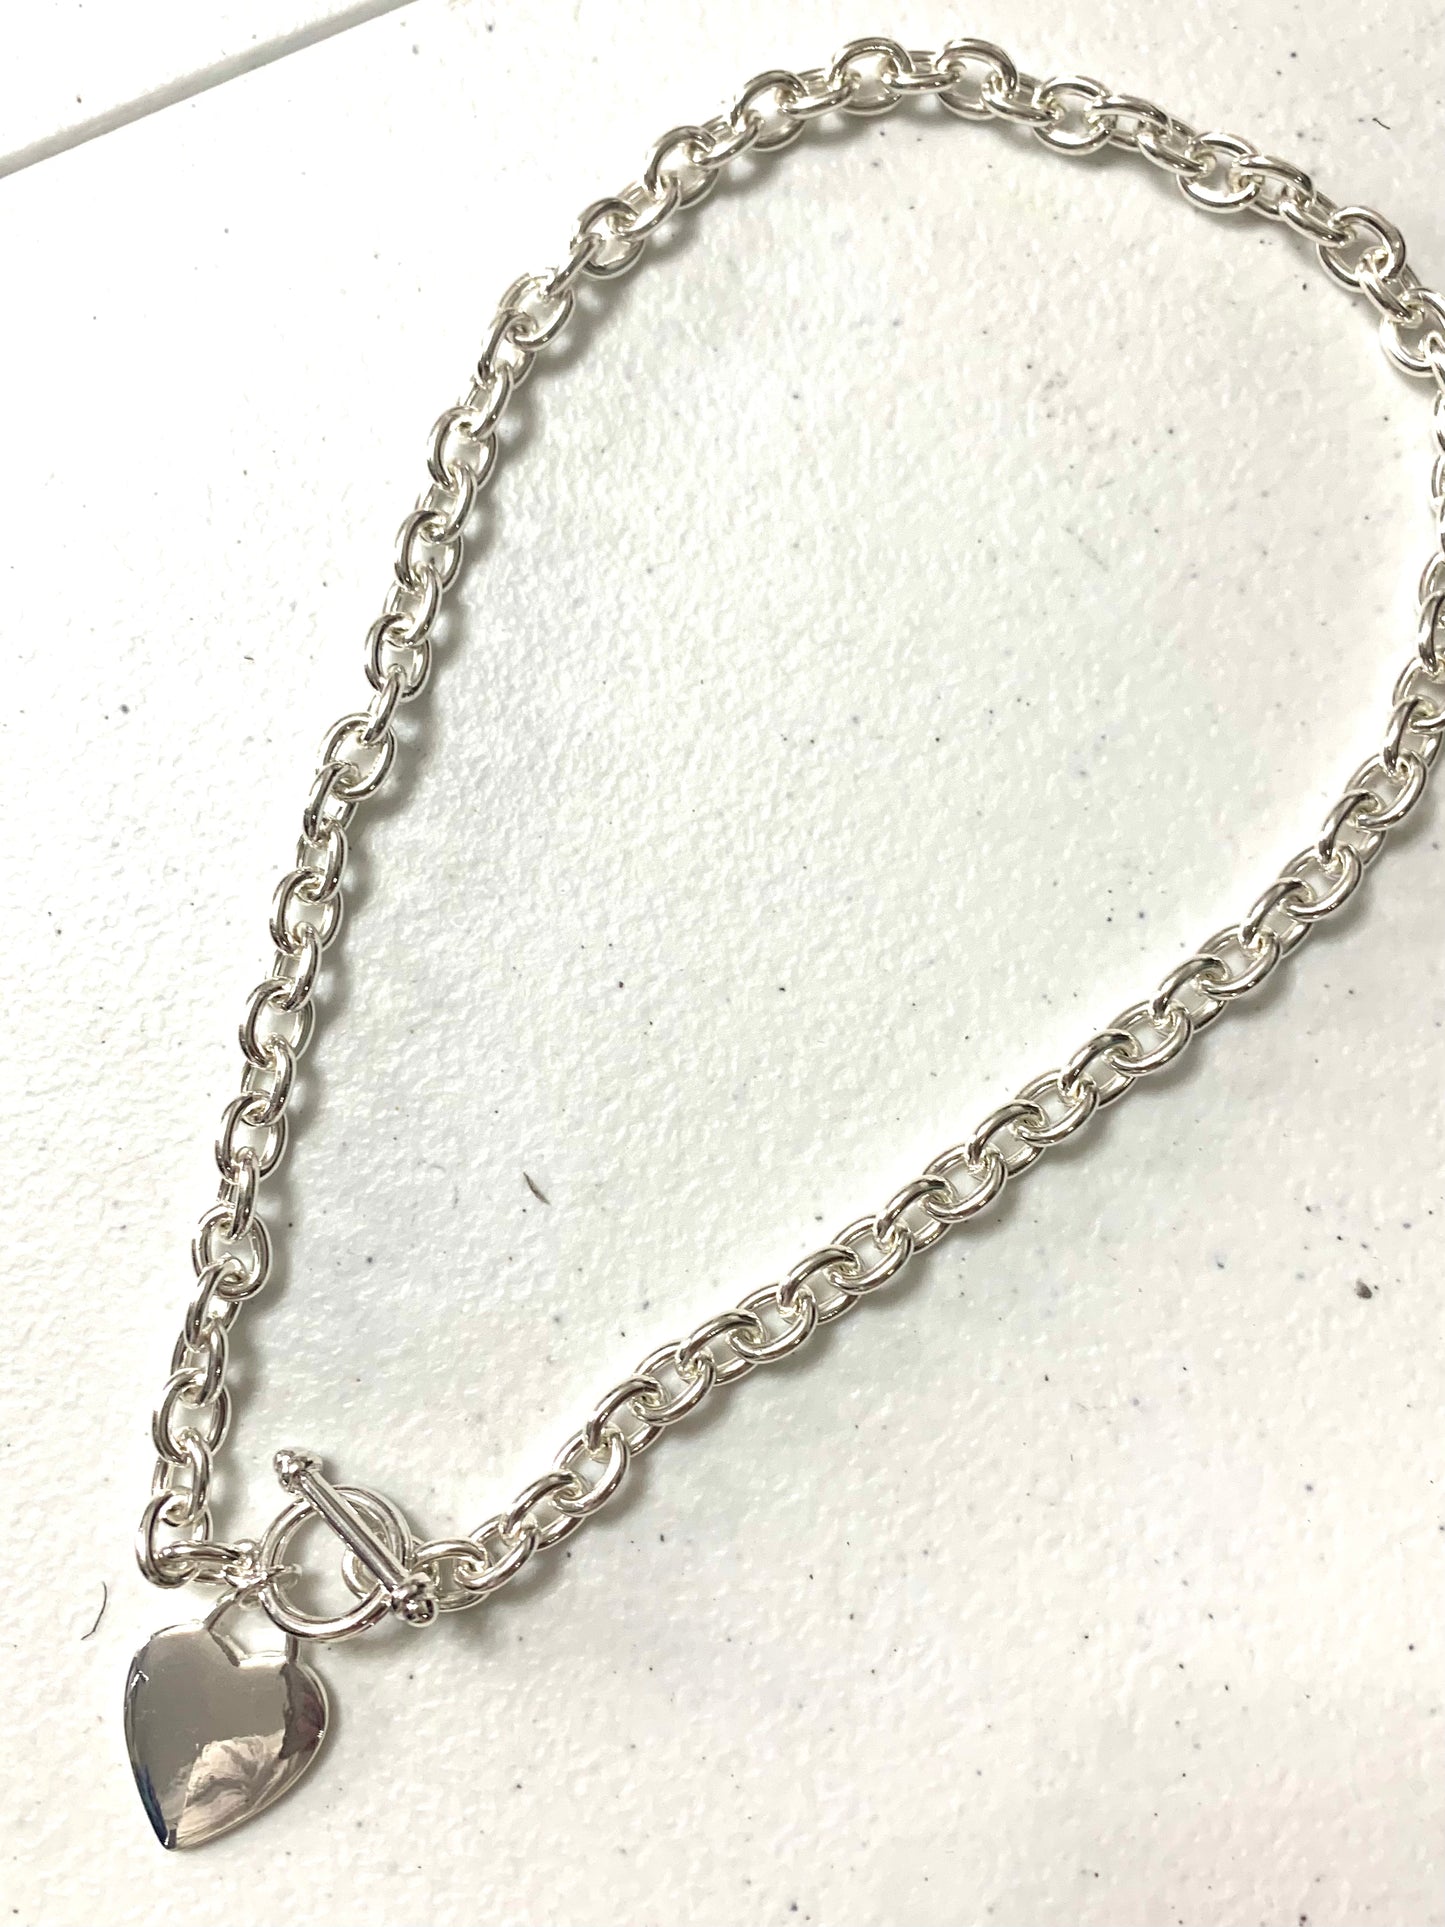 Tiffany Inspired Necklace & Bracelet